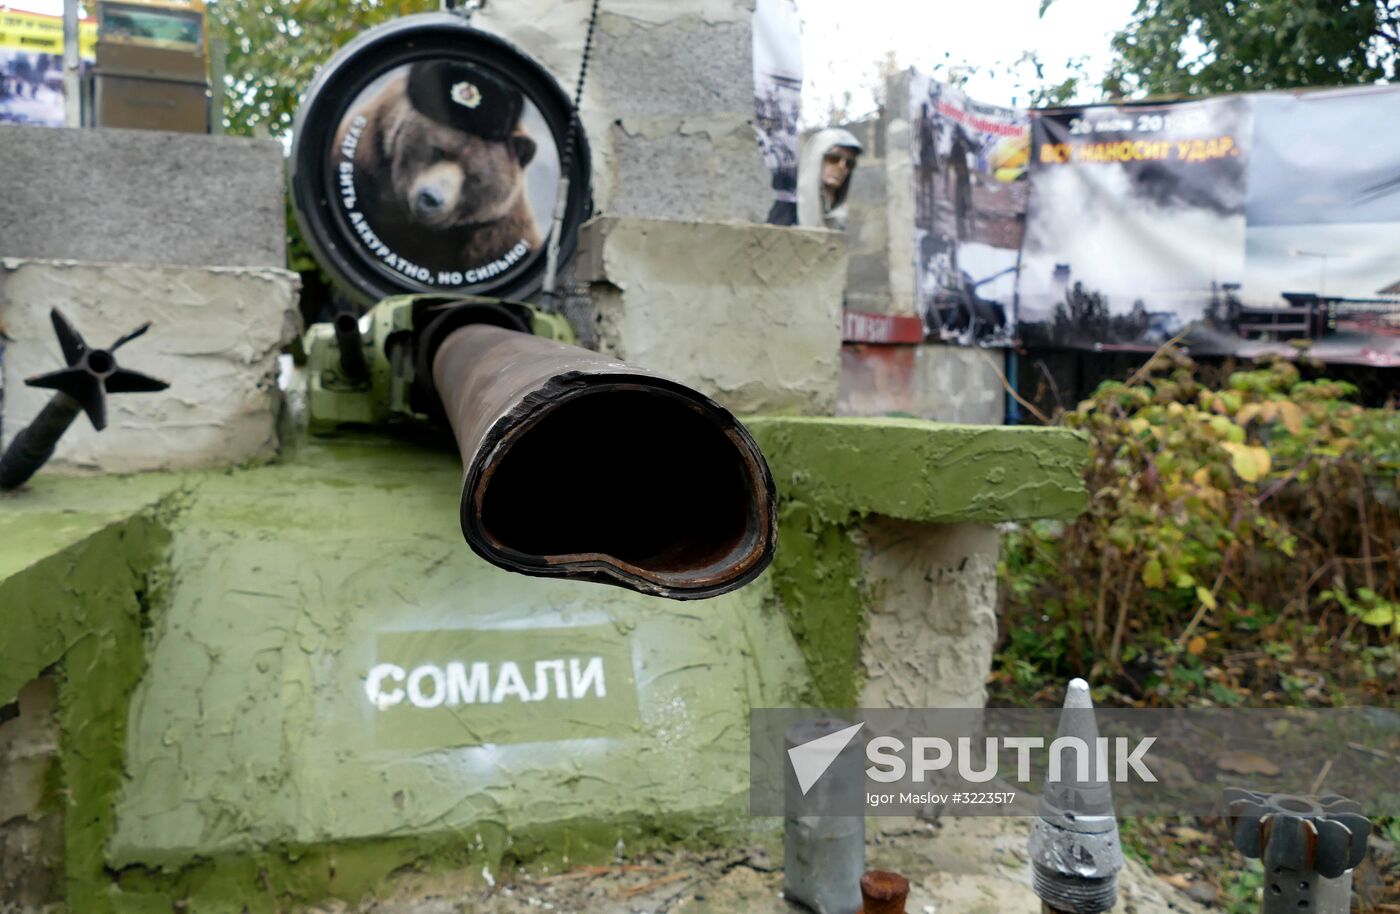 Open air museum "Civil war in Donbass" in Donetsk